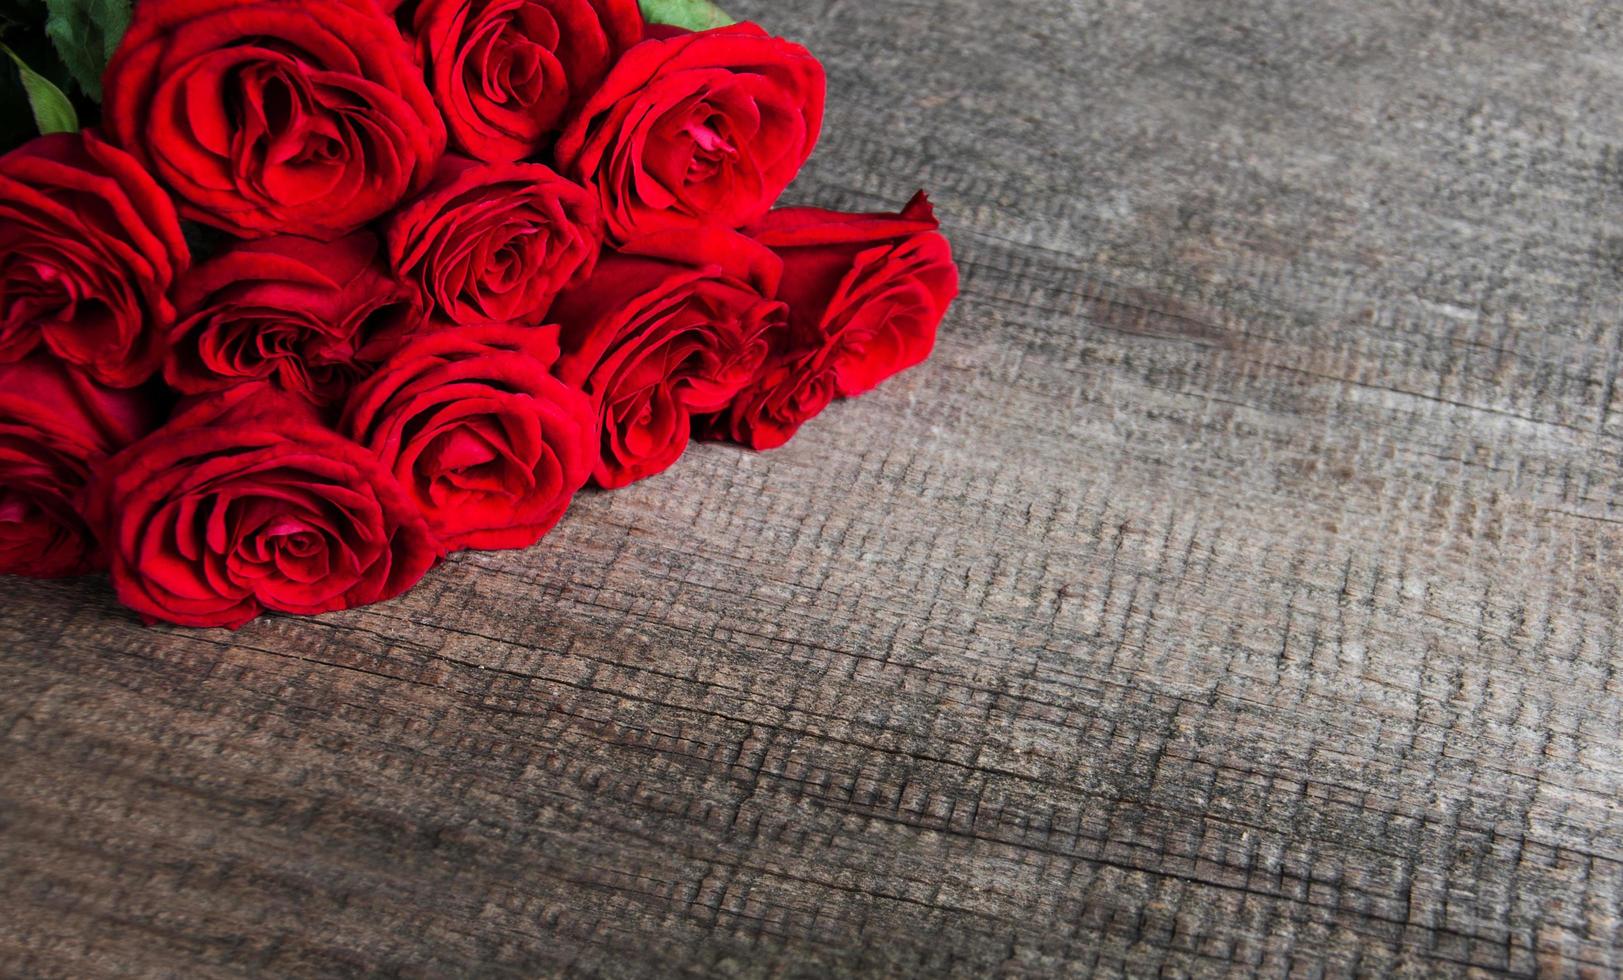 rose rosse su un tavolo foto